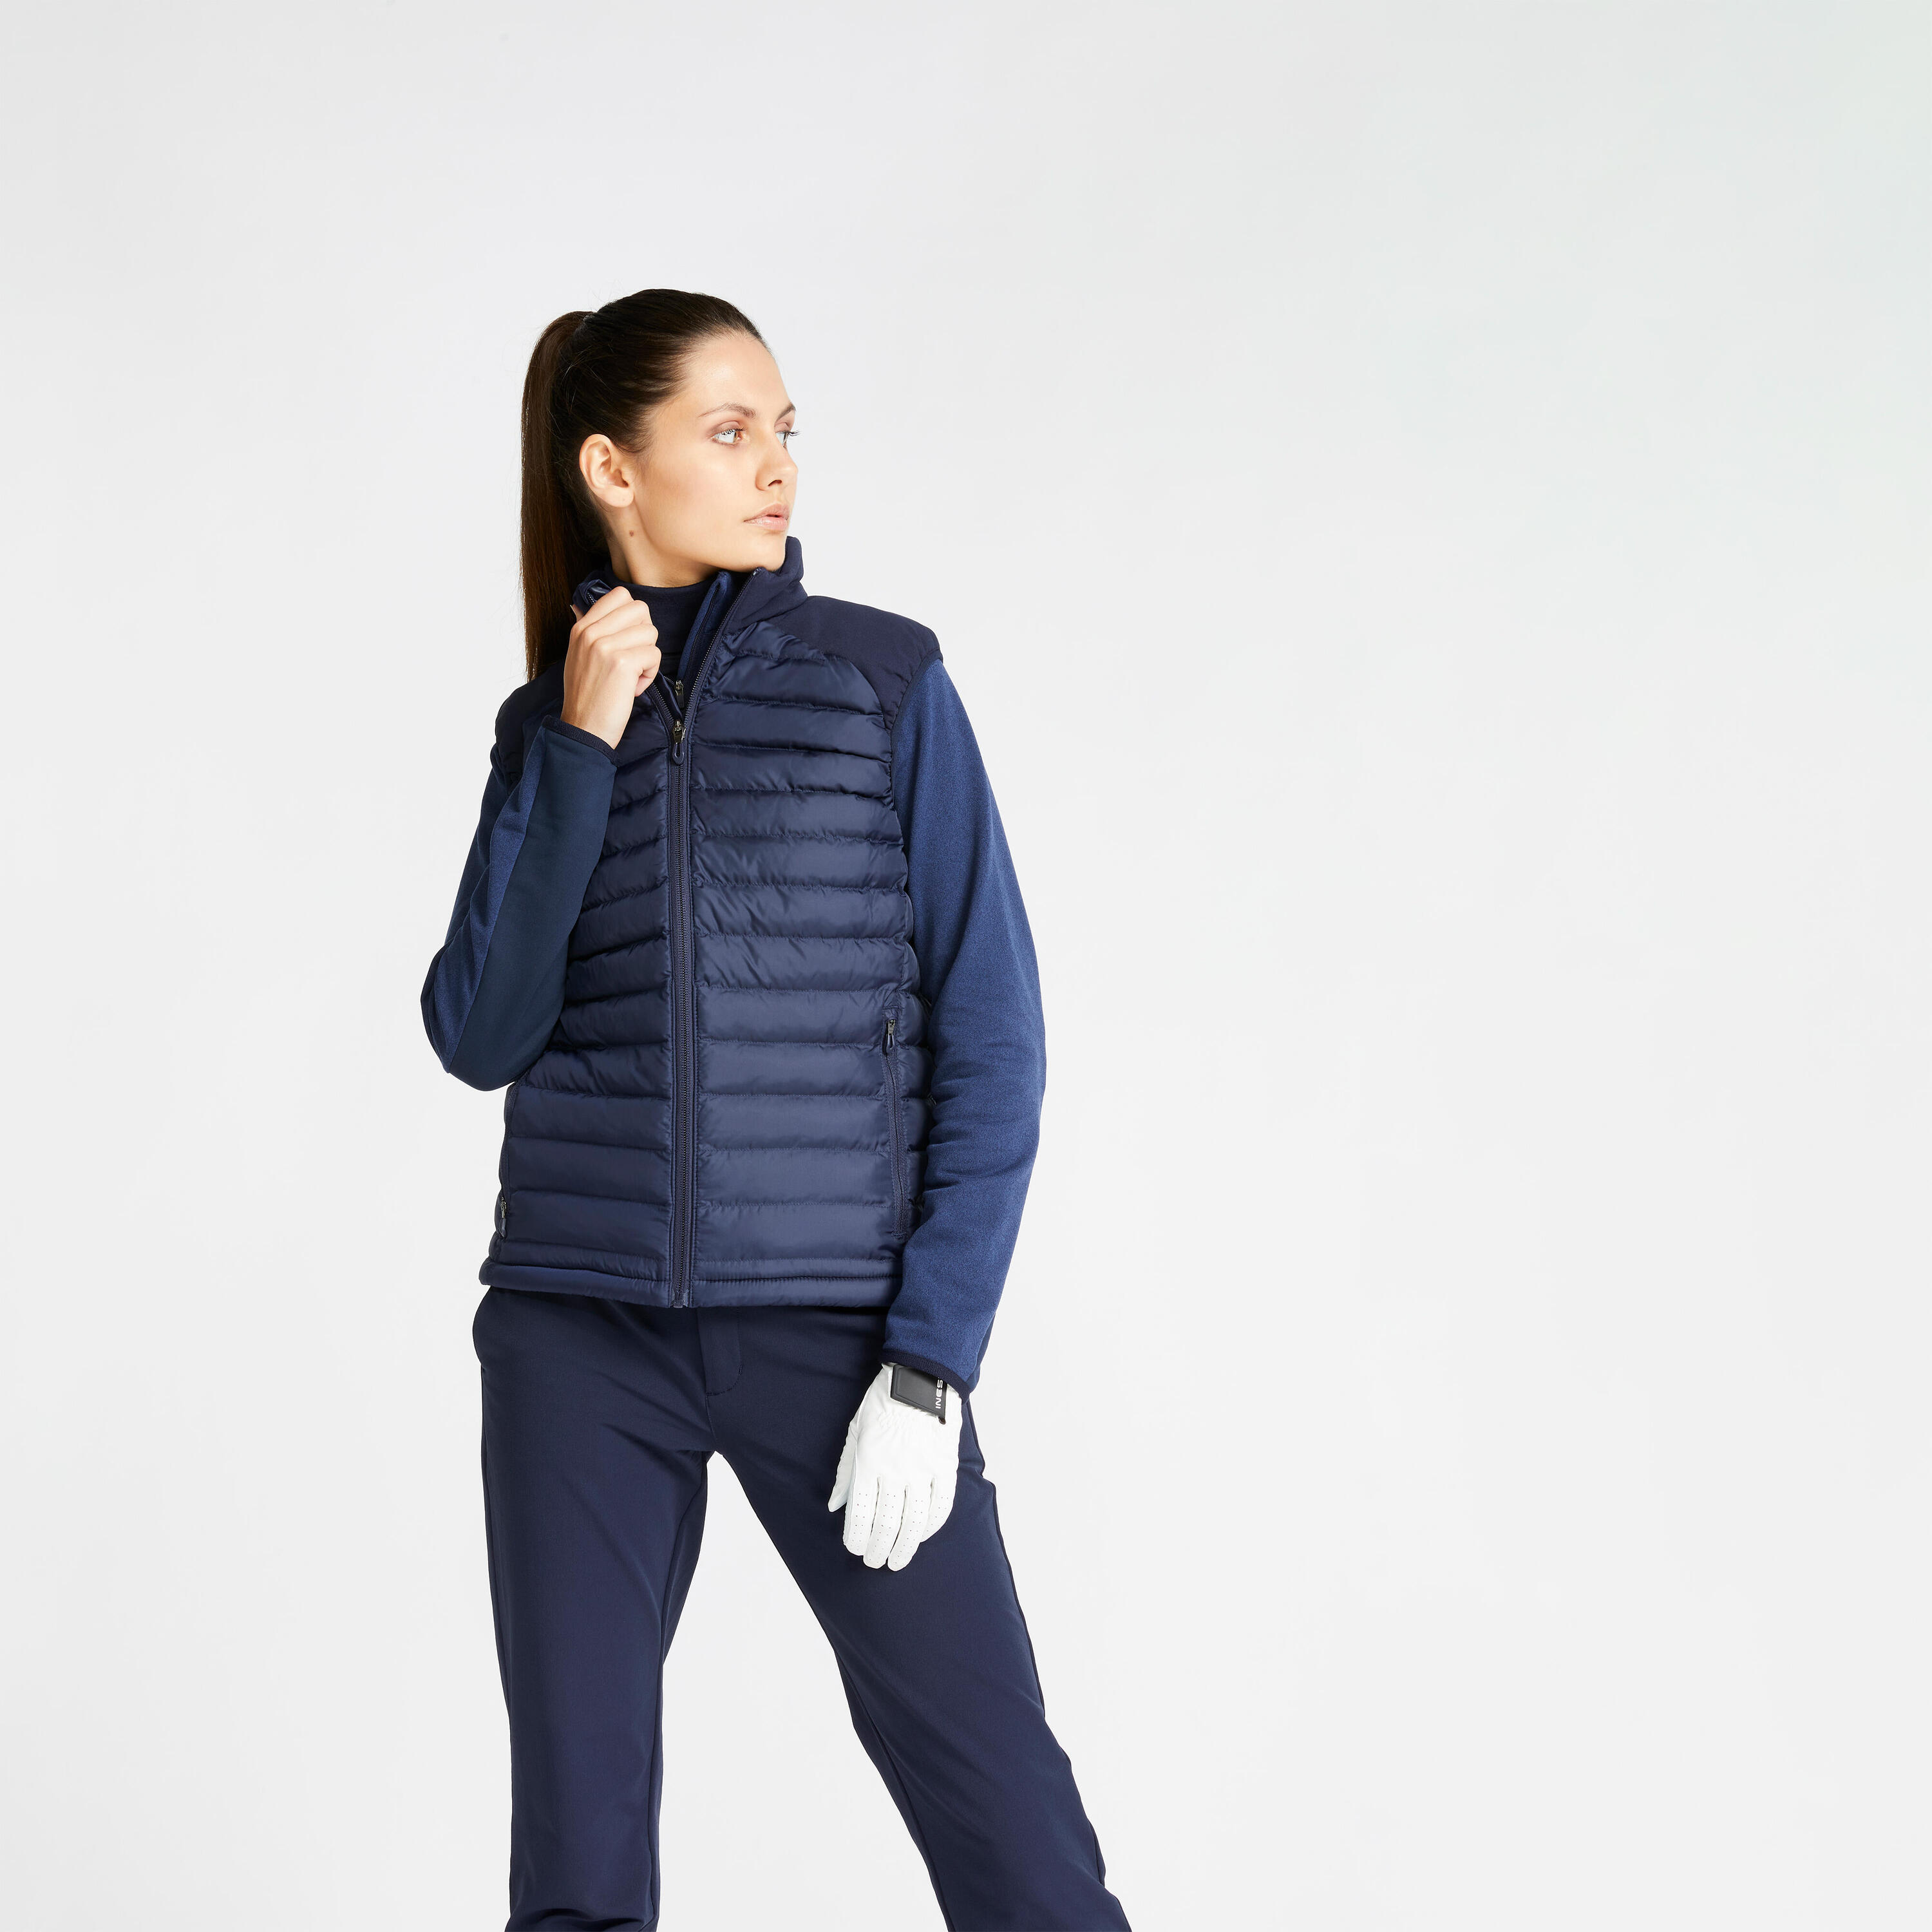 Women's golf winter sleeveless padded jacket CW500 navy blue 1/7